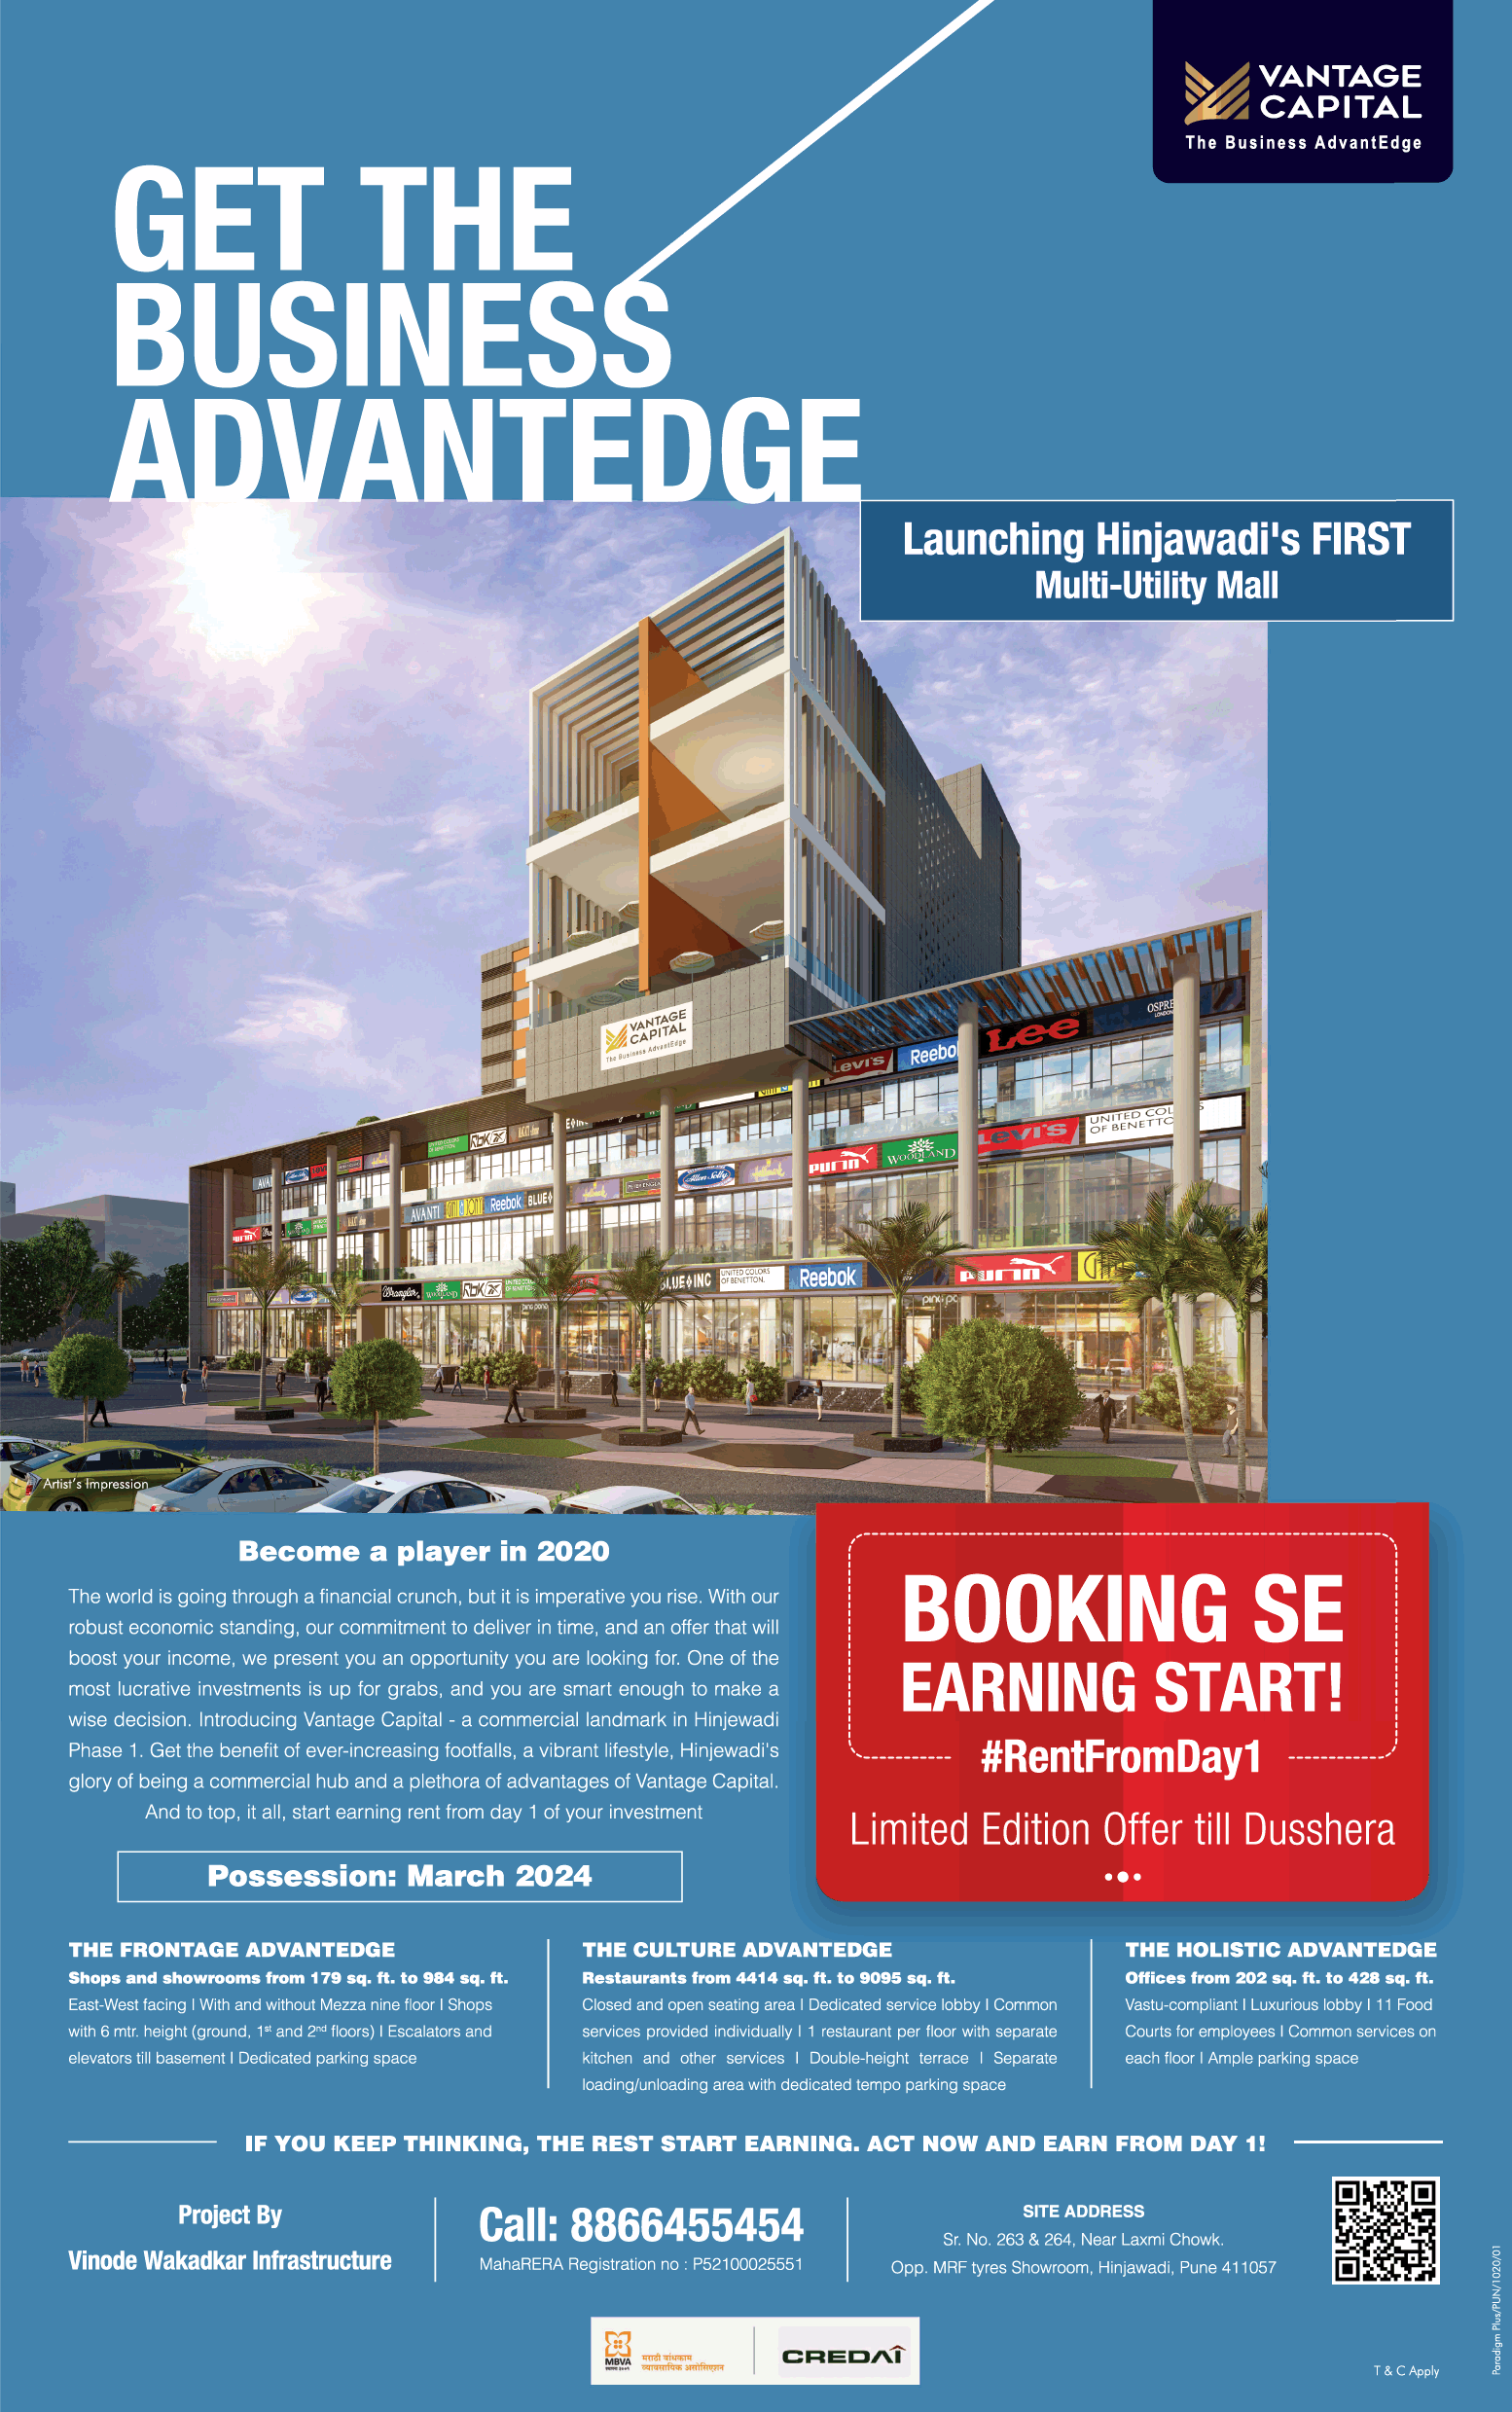 vantage-capital-launching-hindjawadi-first-multi-utility-mall-ad-toi-pune-10-10-2020